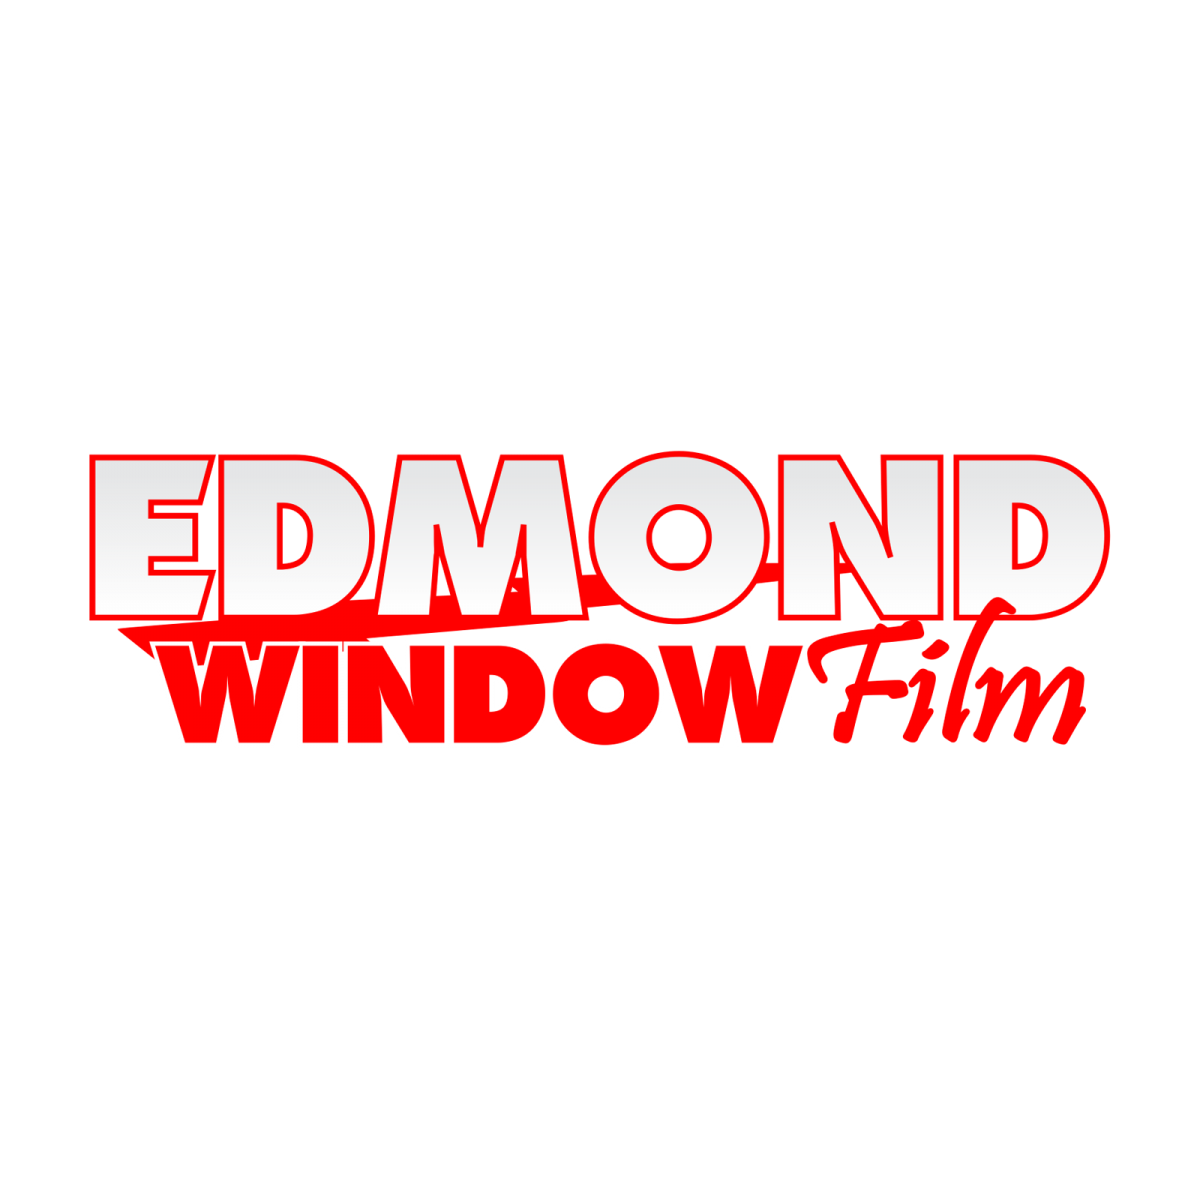 edmond window film logo1